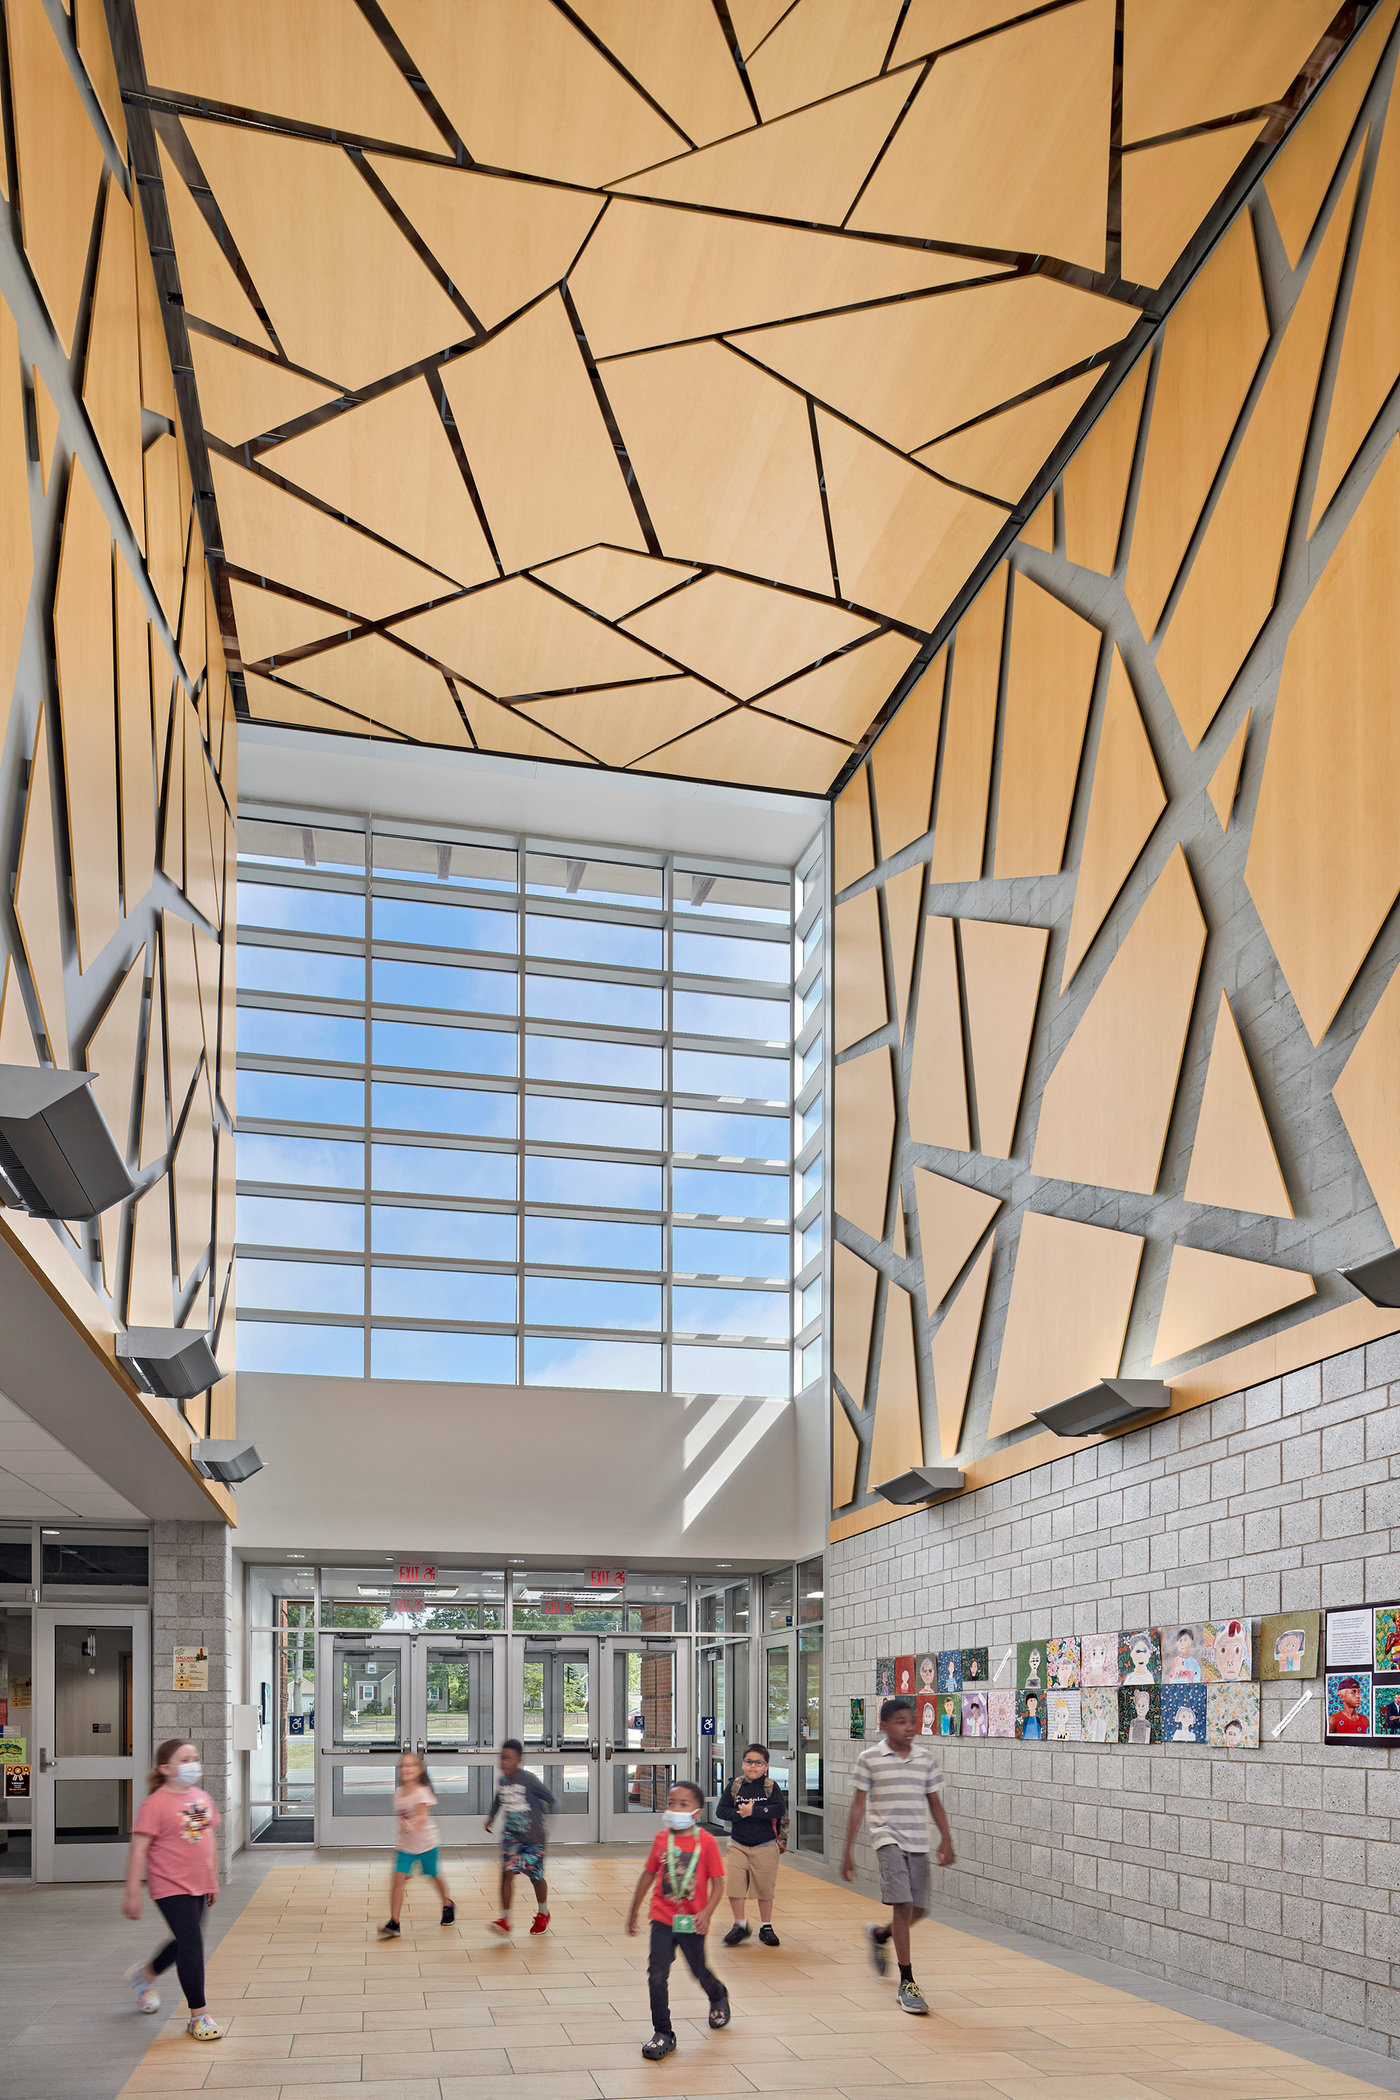 4 tskp manchester verplanck elementary school interior entrance atrium ceiling 1400 0x0x2052x3078 q85